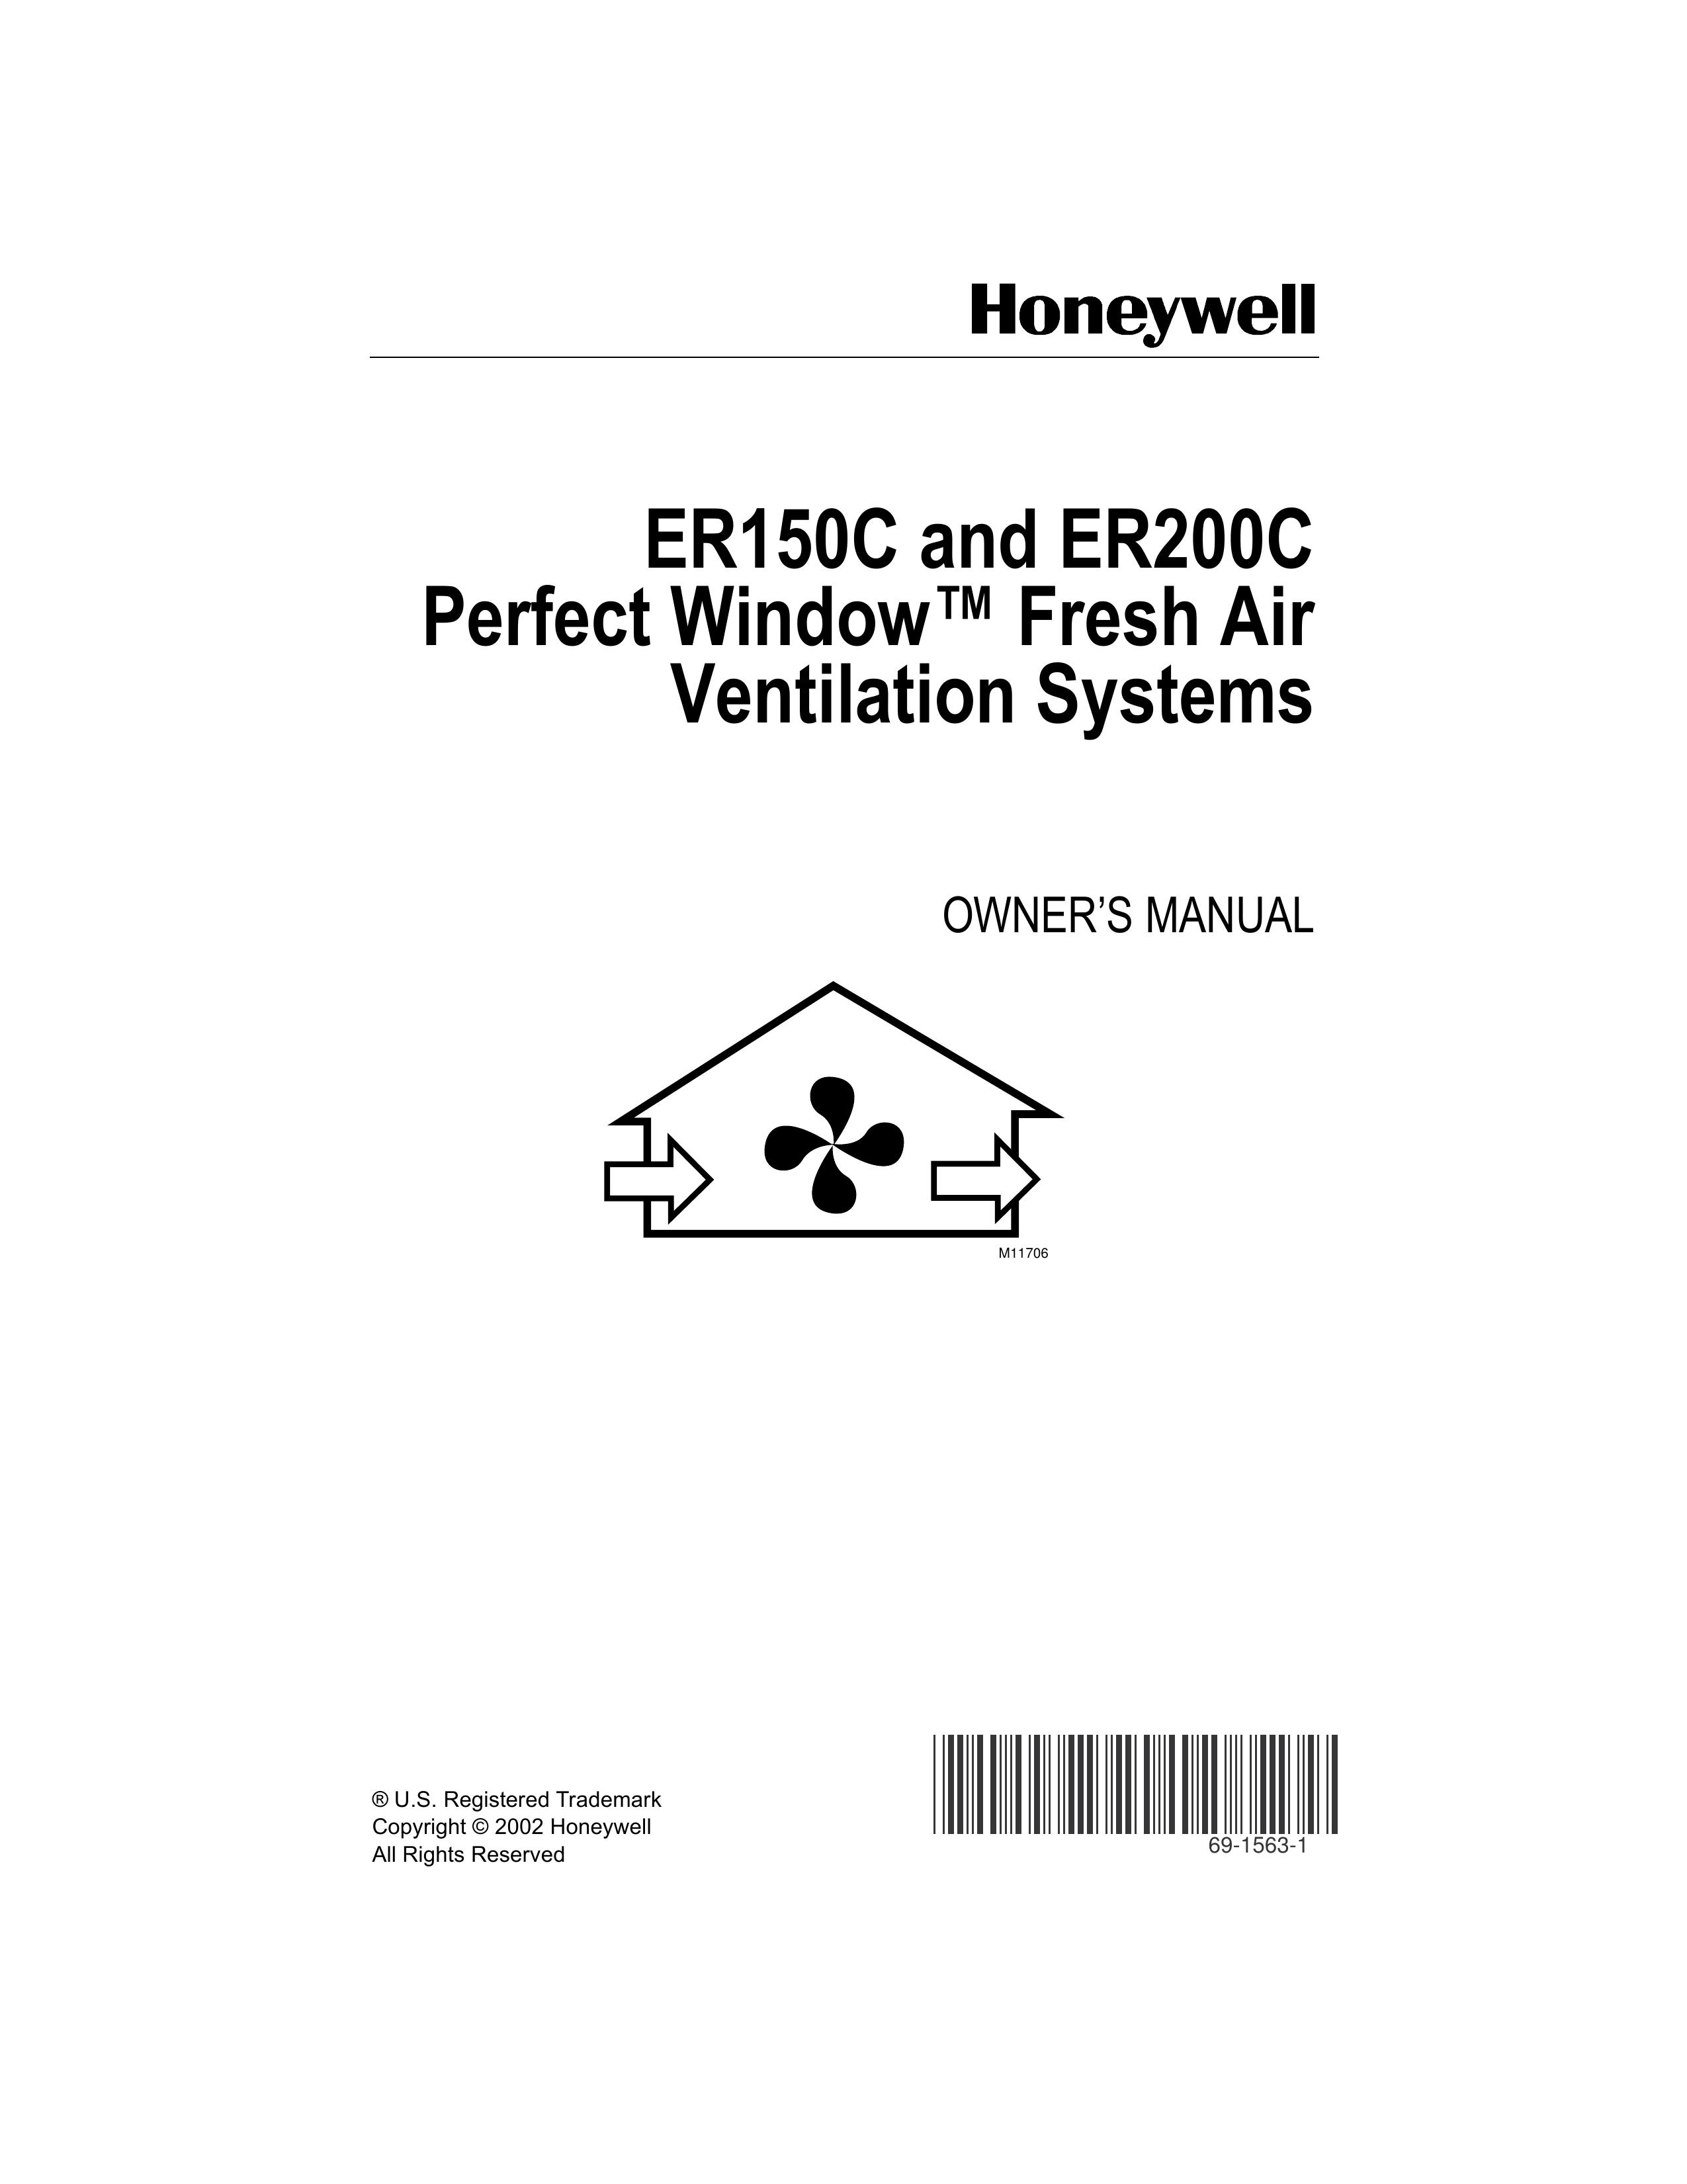 Honeywell ER150C Ventilation Hood User Manual